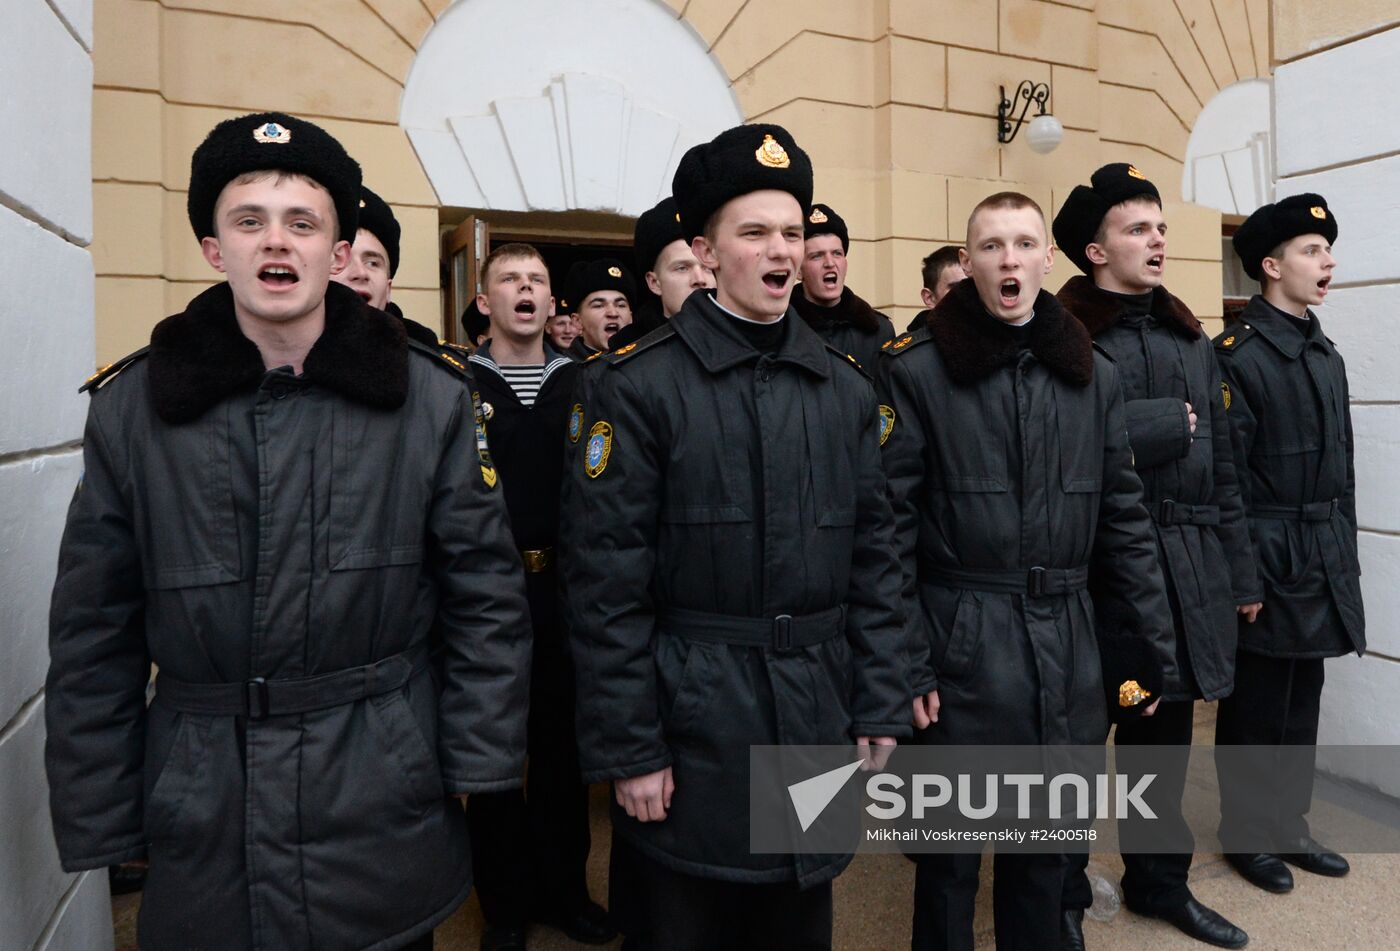 Russian flag raising ceremony at Nakhimov Naval Academy in Sevastopol